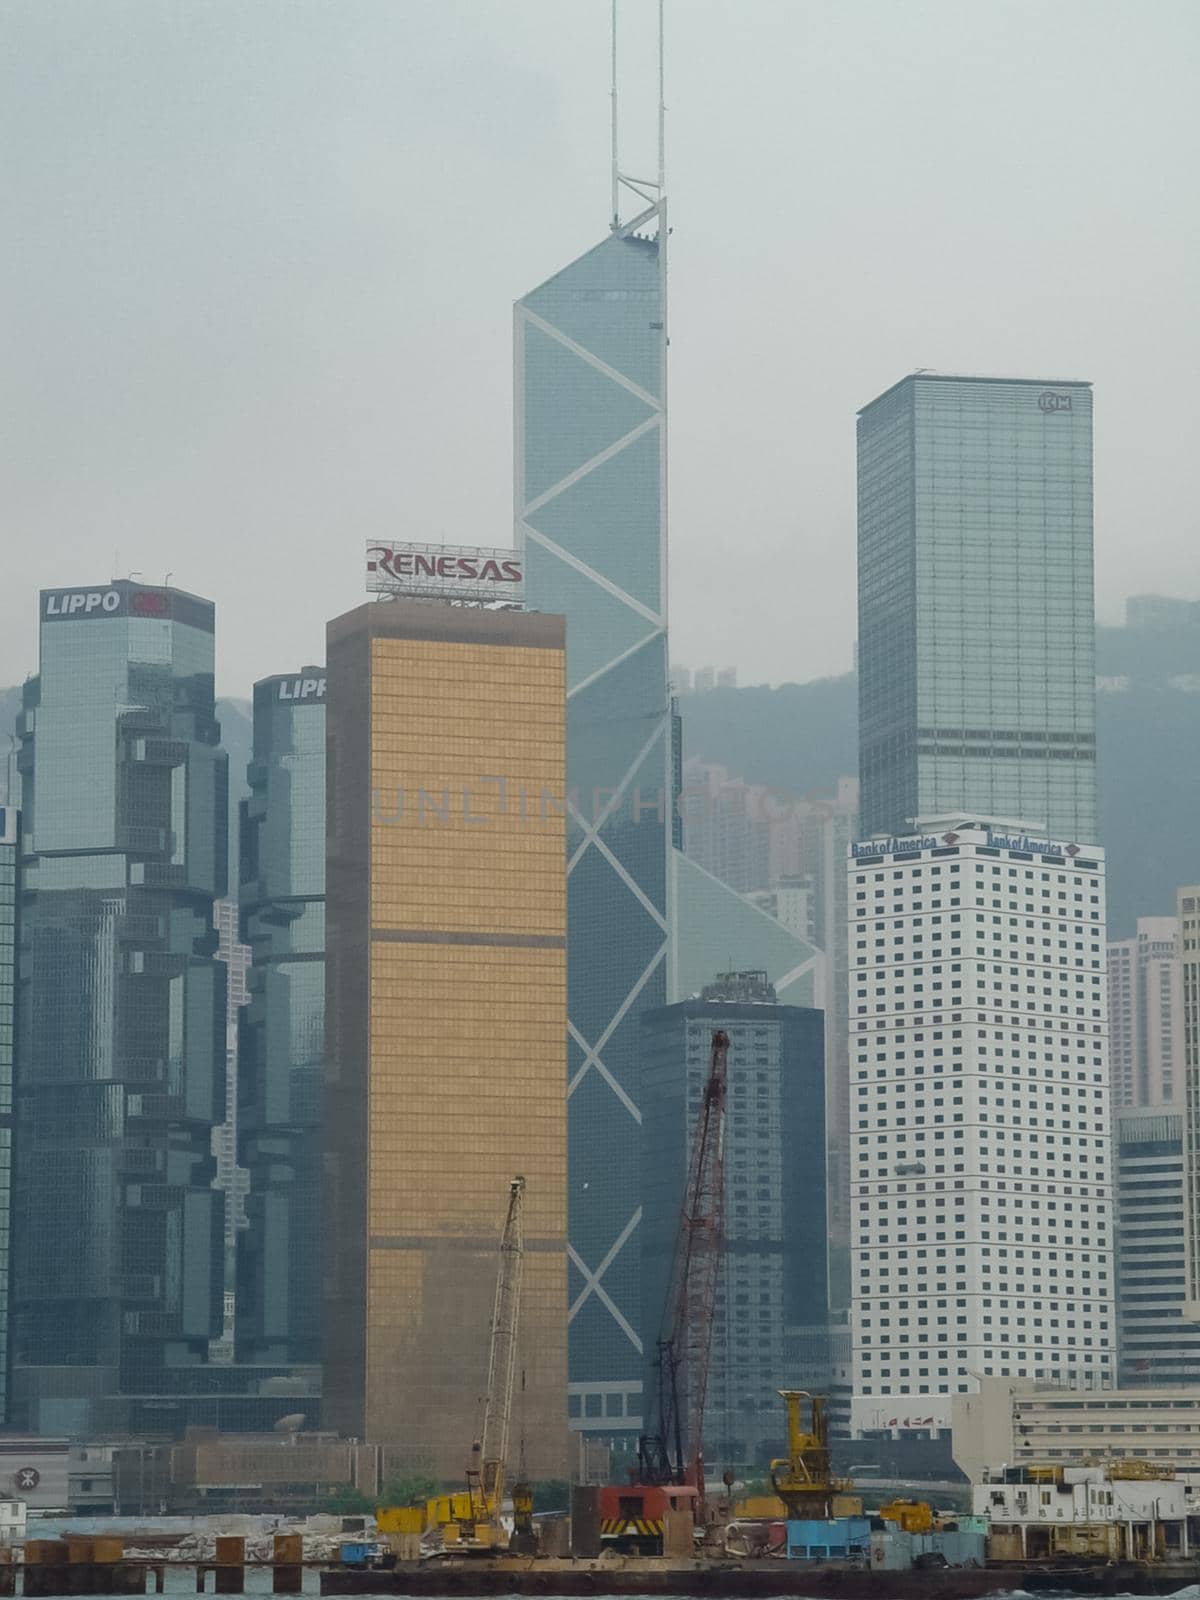 Skyscrapers of Hong Kong. The cityscape through a haze of smog over the city.